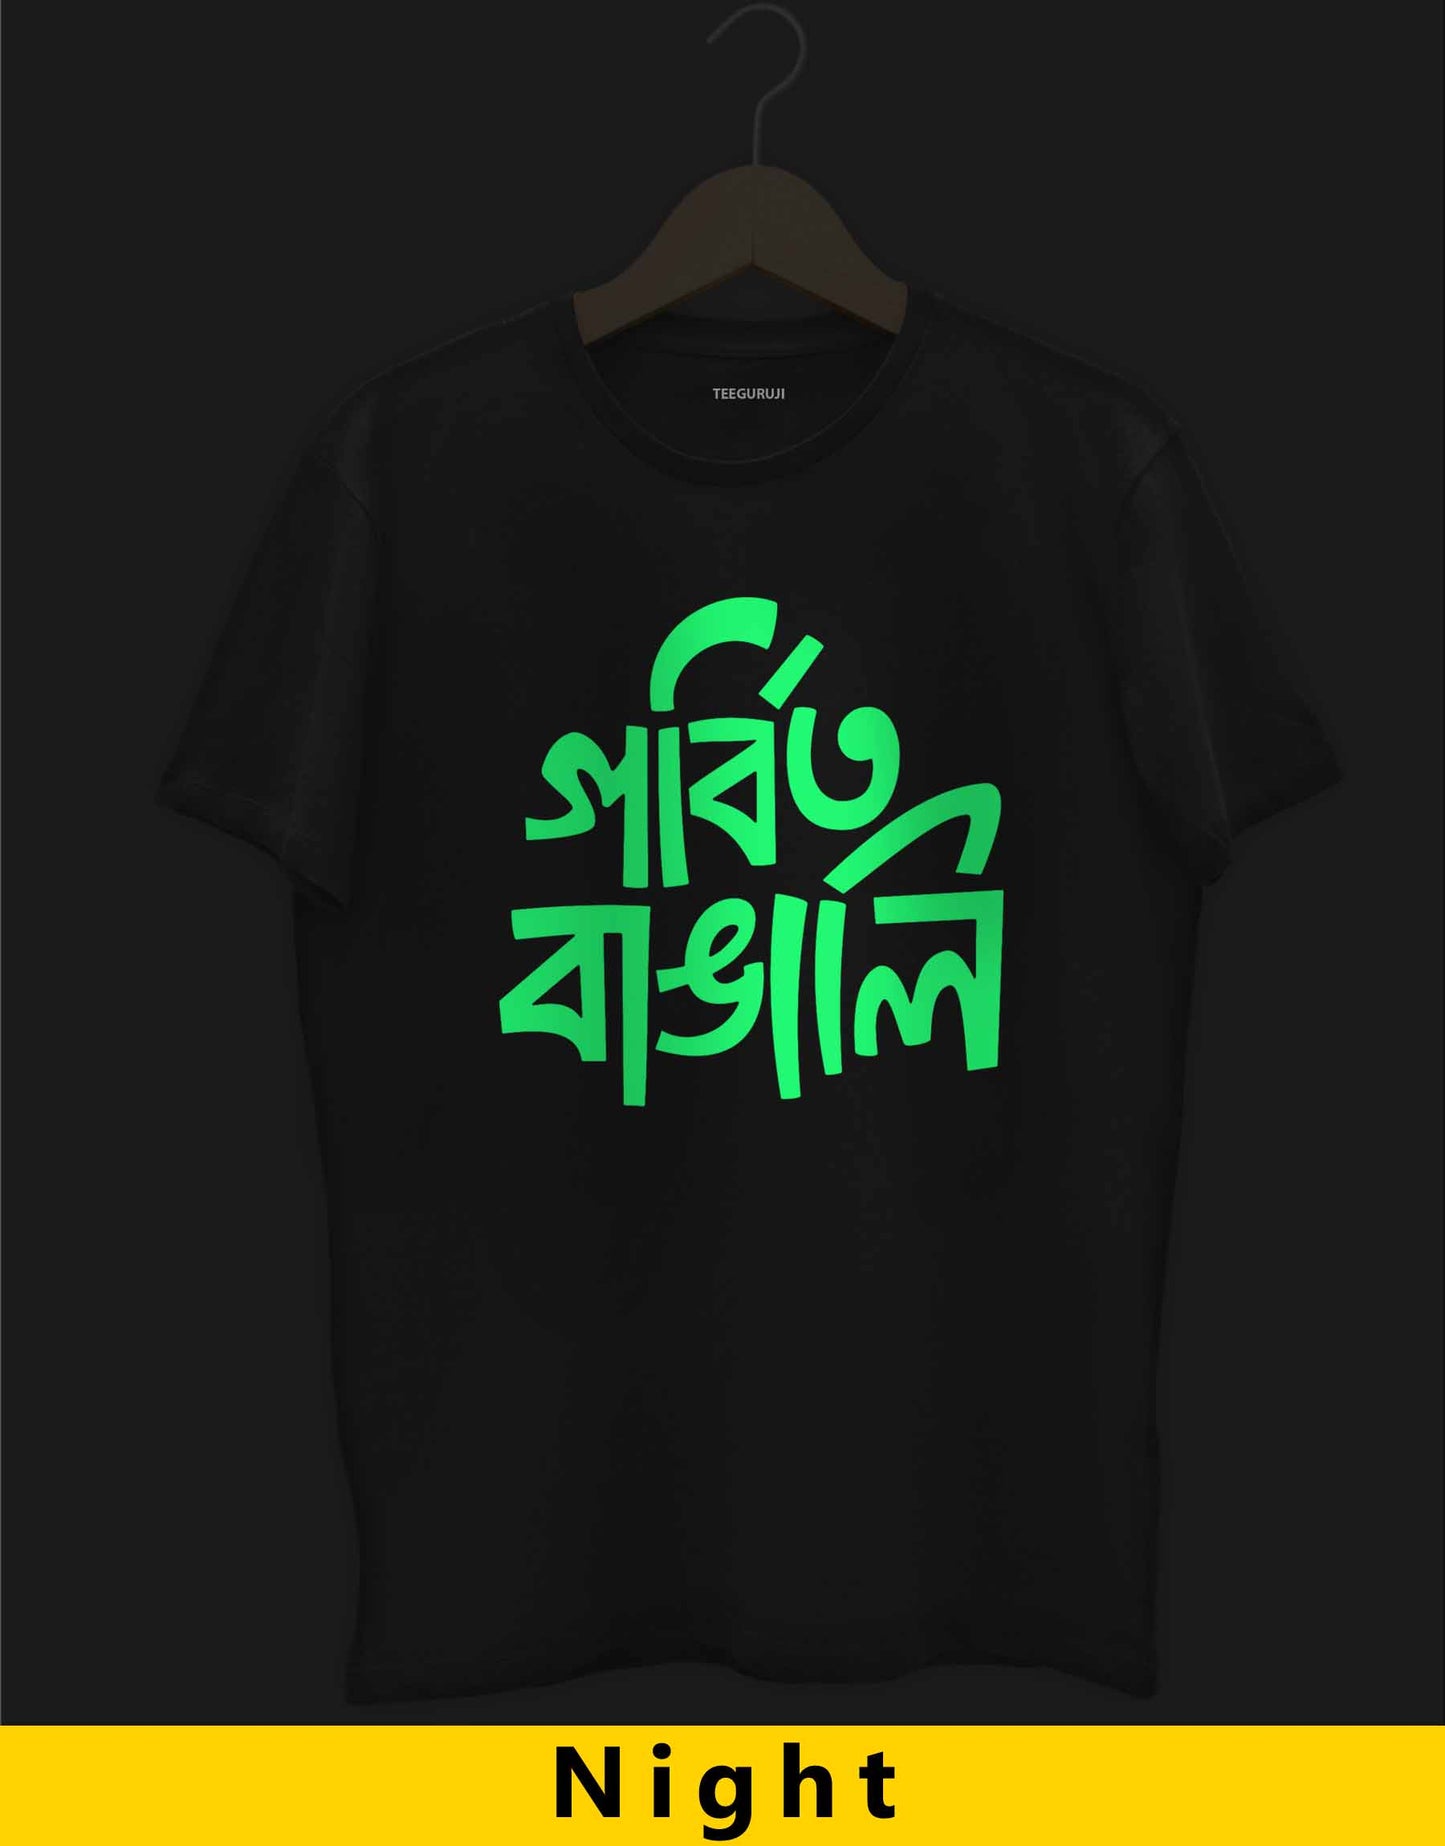 Garbito Bangali - Night Vision Black T-Shirt - 599.00 - TEEGURUJI - Free Shipping